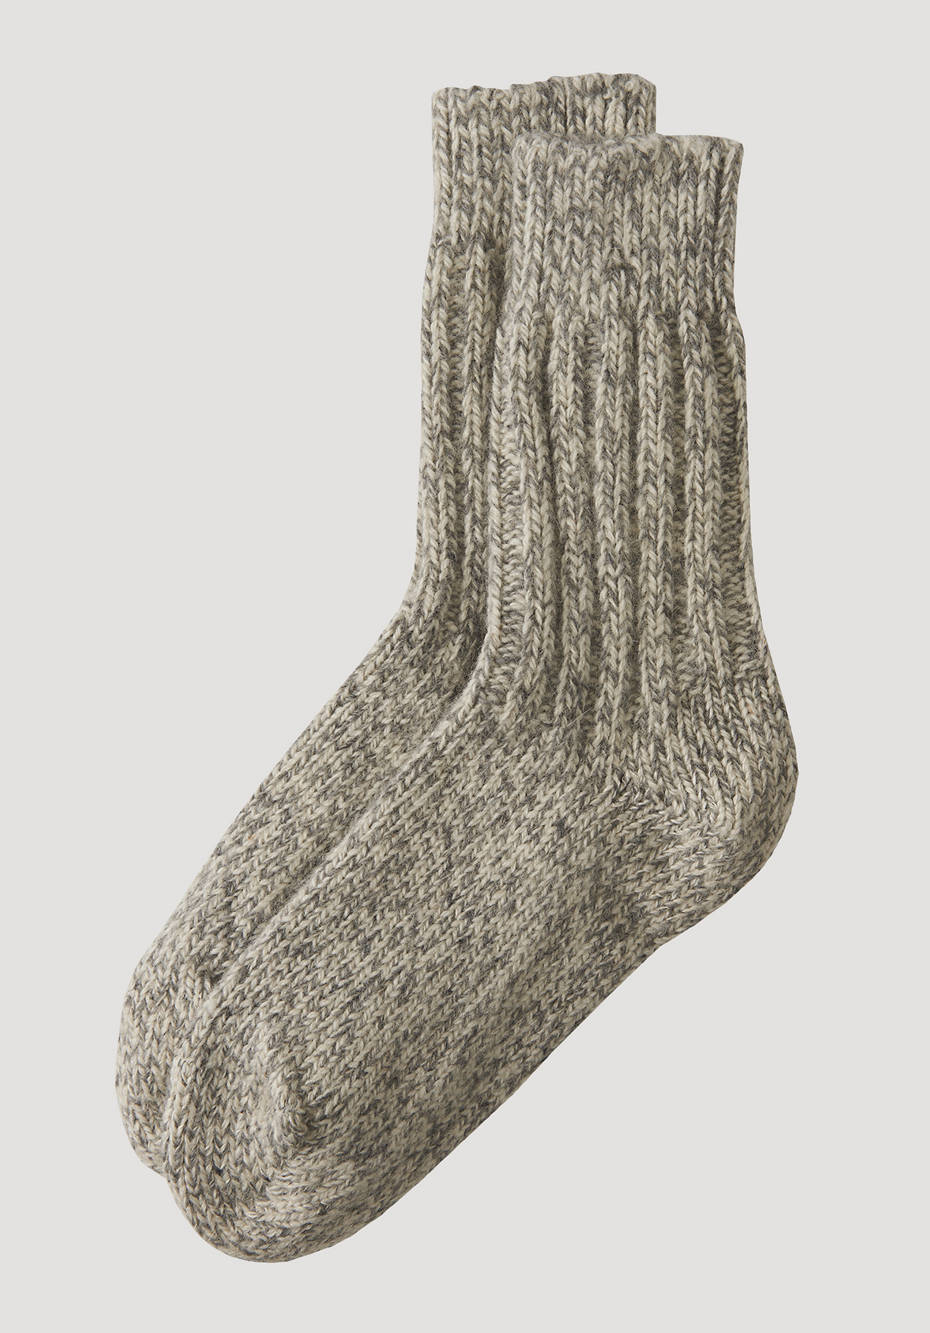 Unisex knitted socks made from pure organic merino wool